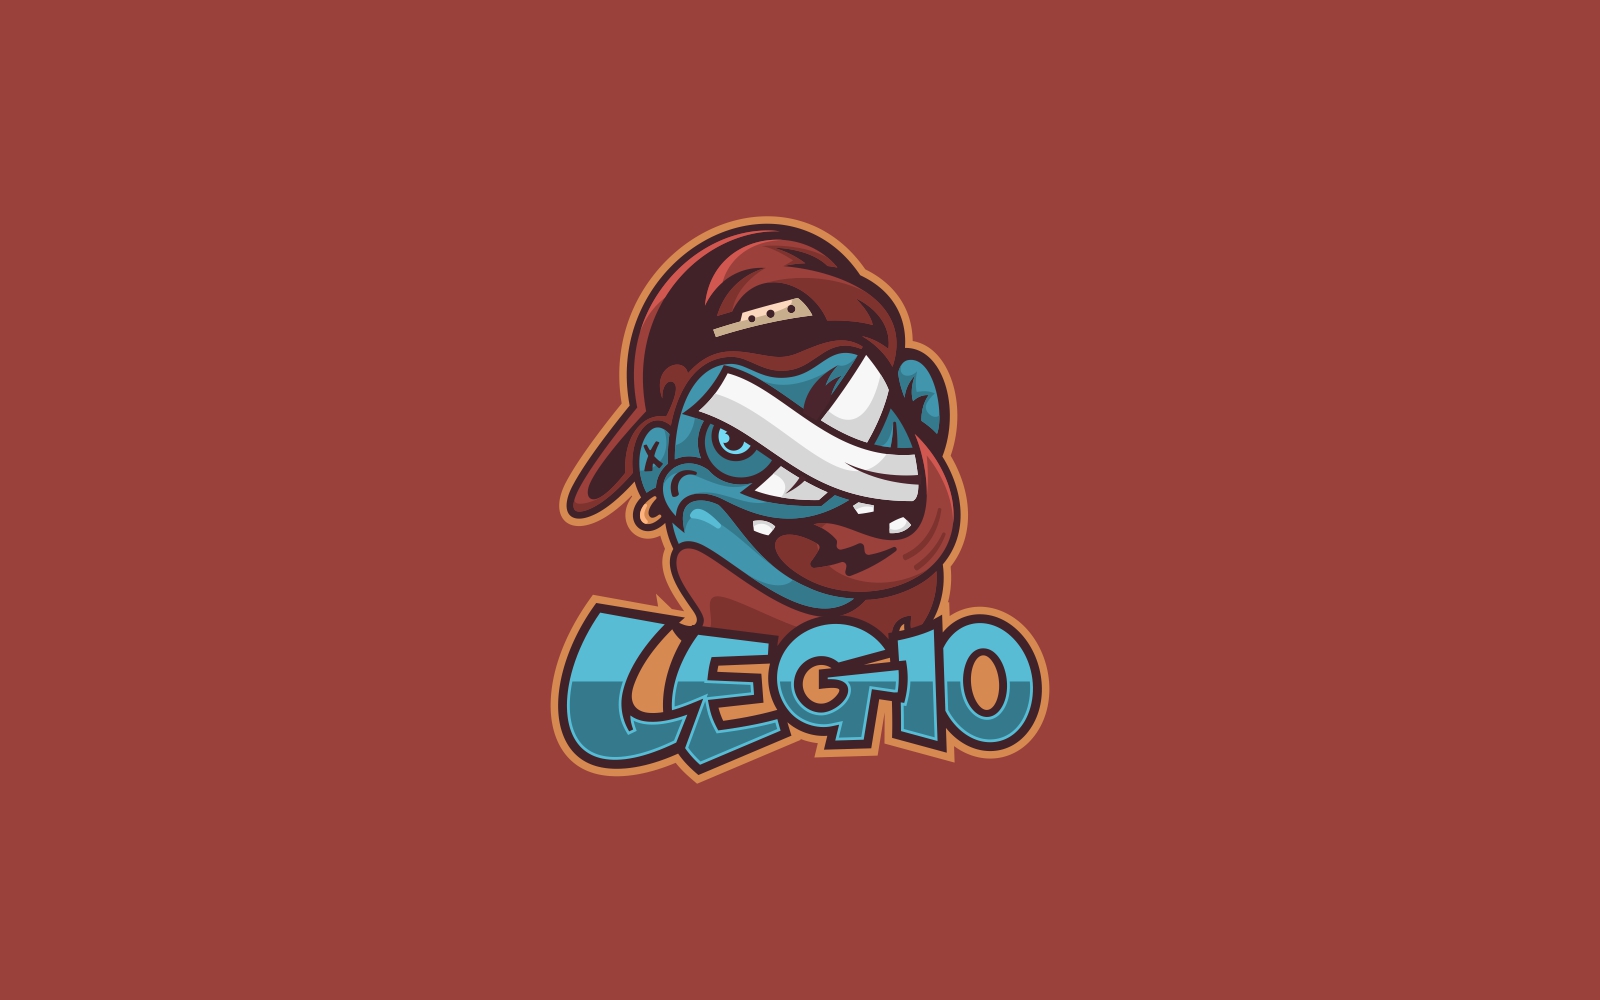 Legio Simple Mascot Logo Style